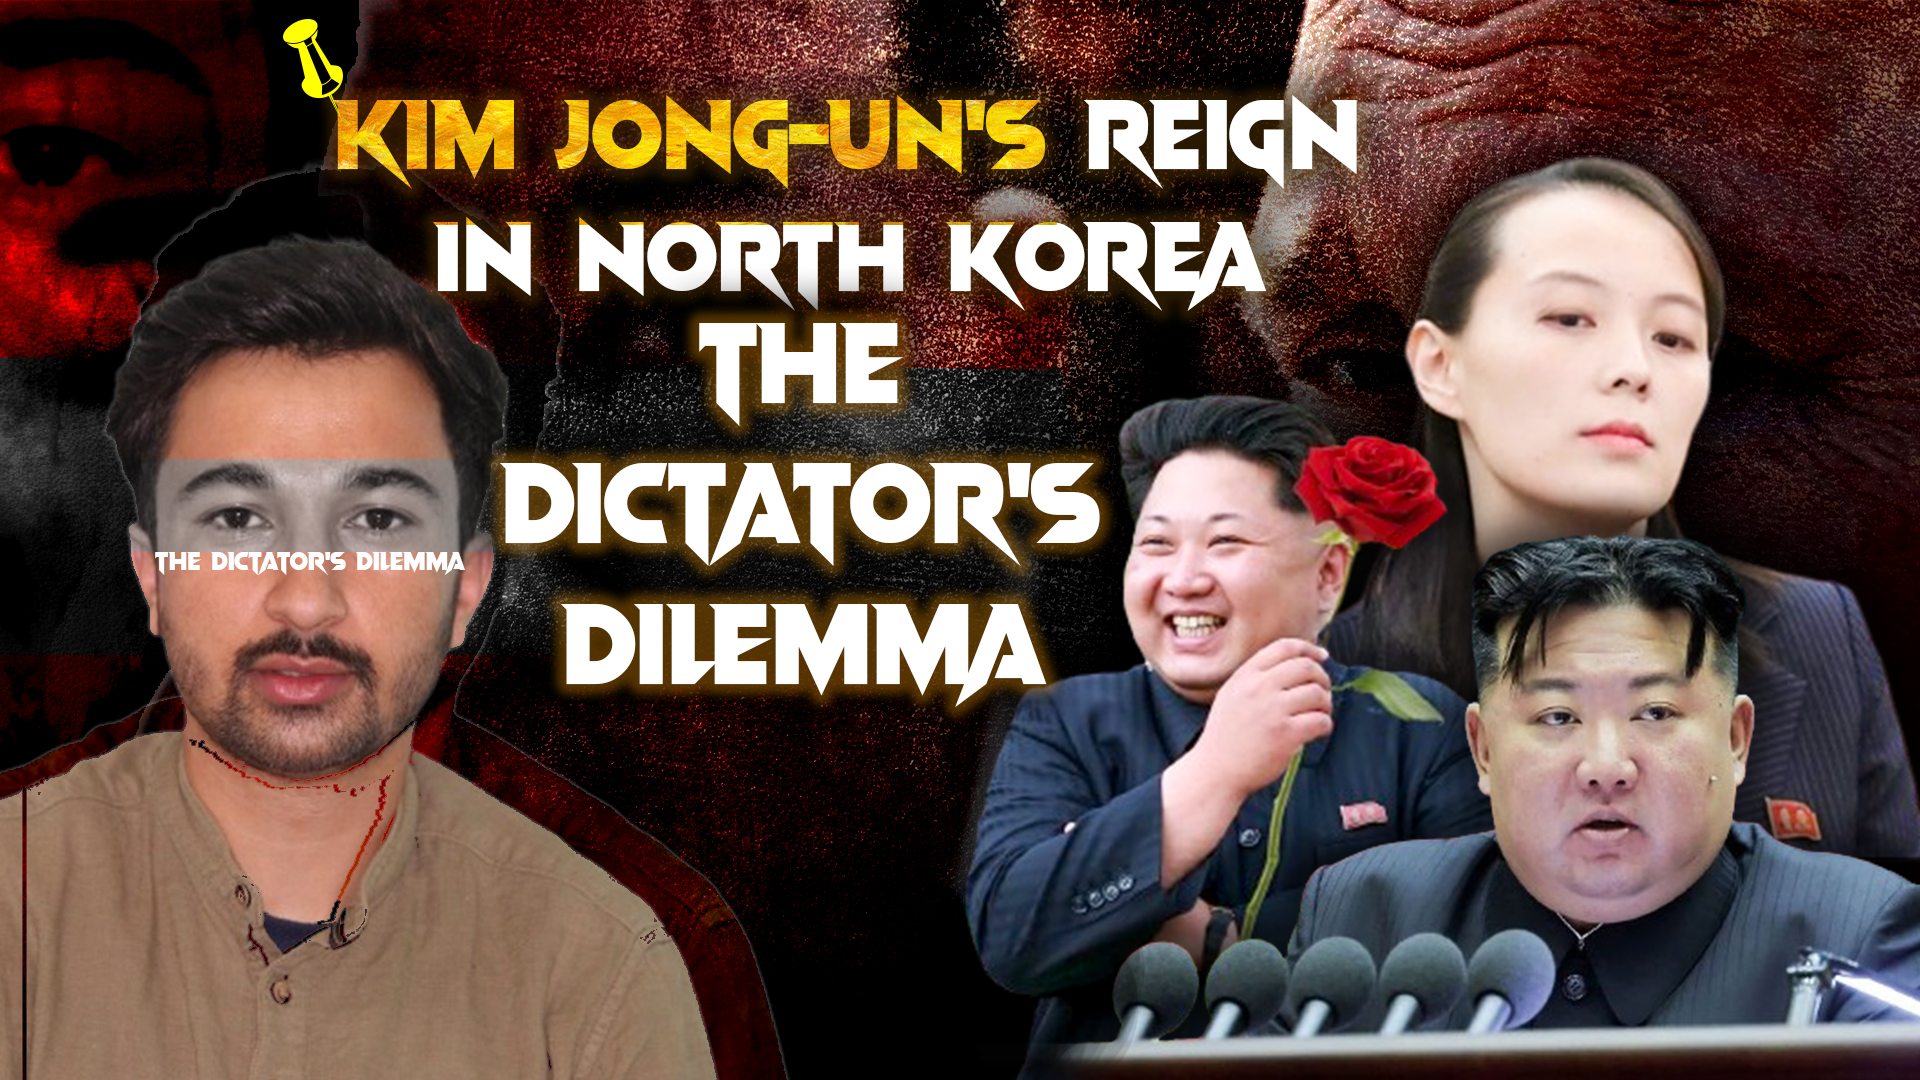 The Dictator’s Dilemma: Kim Jong-Un’s Reign in North Korea